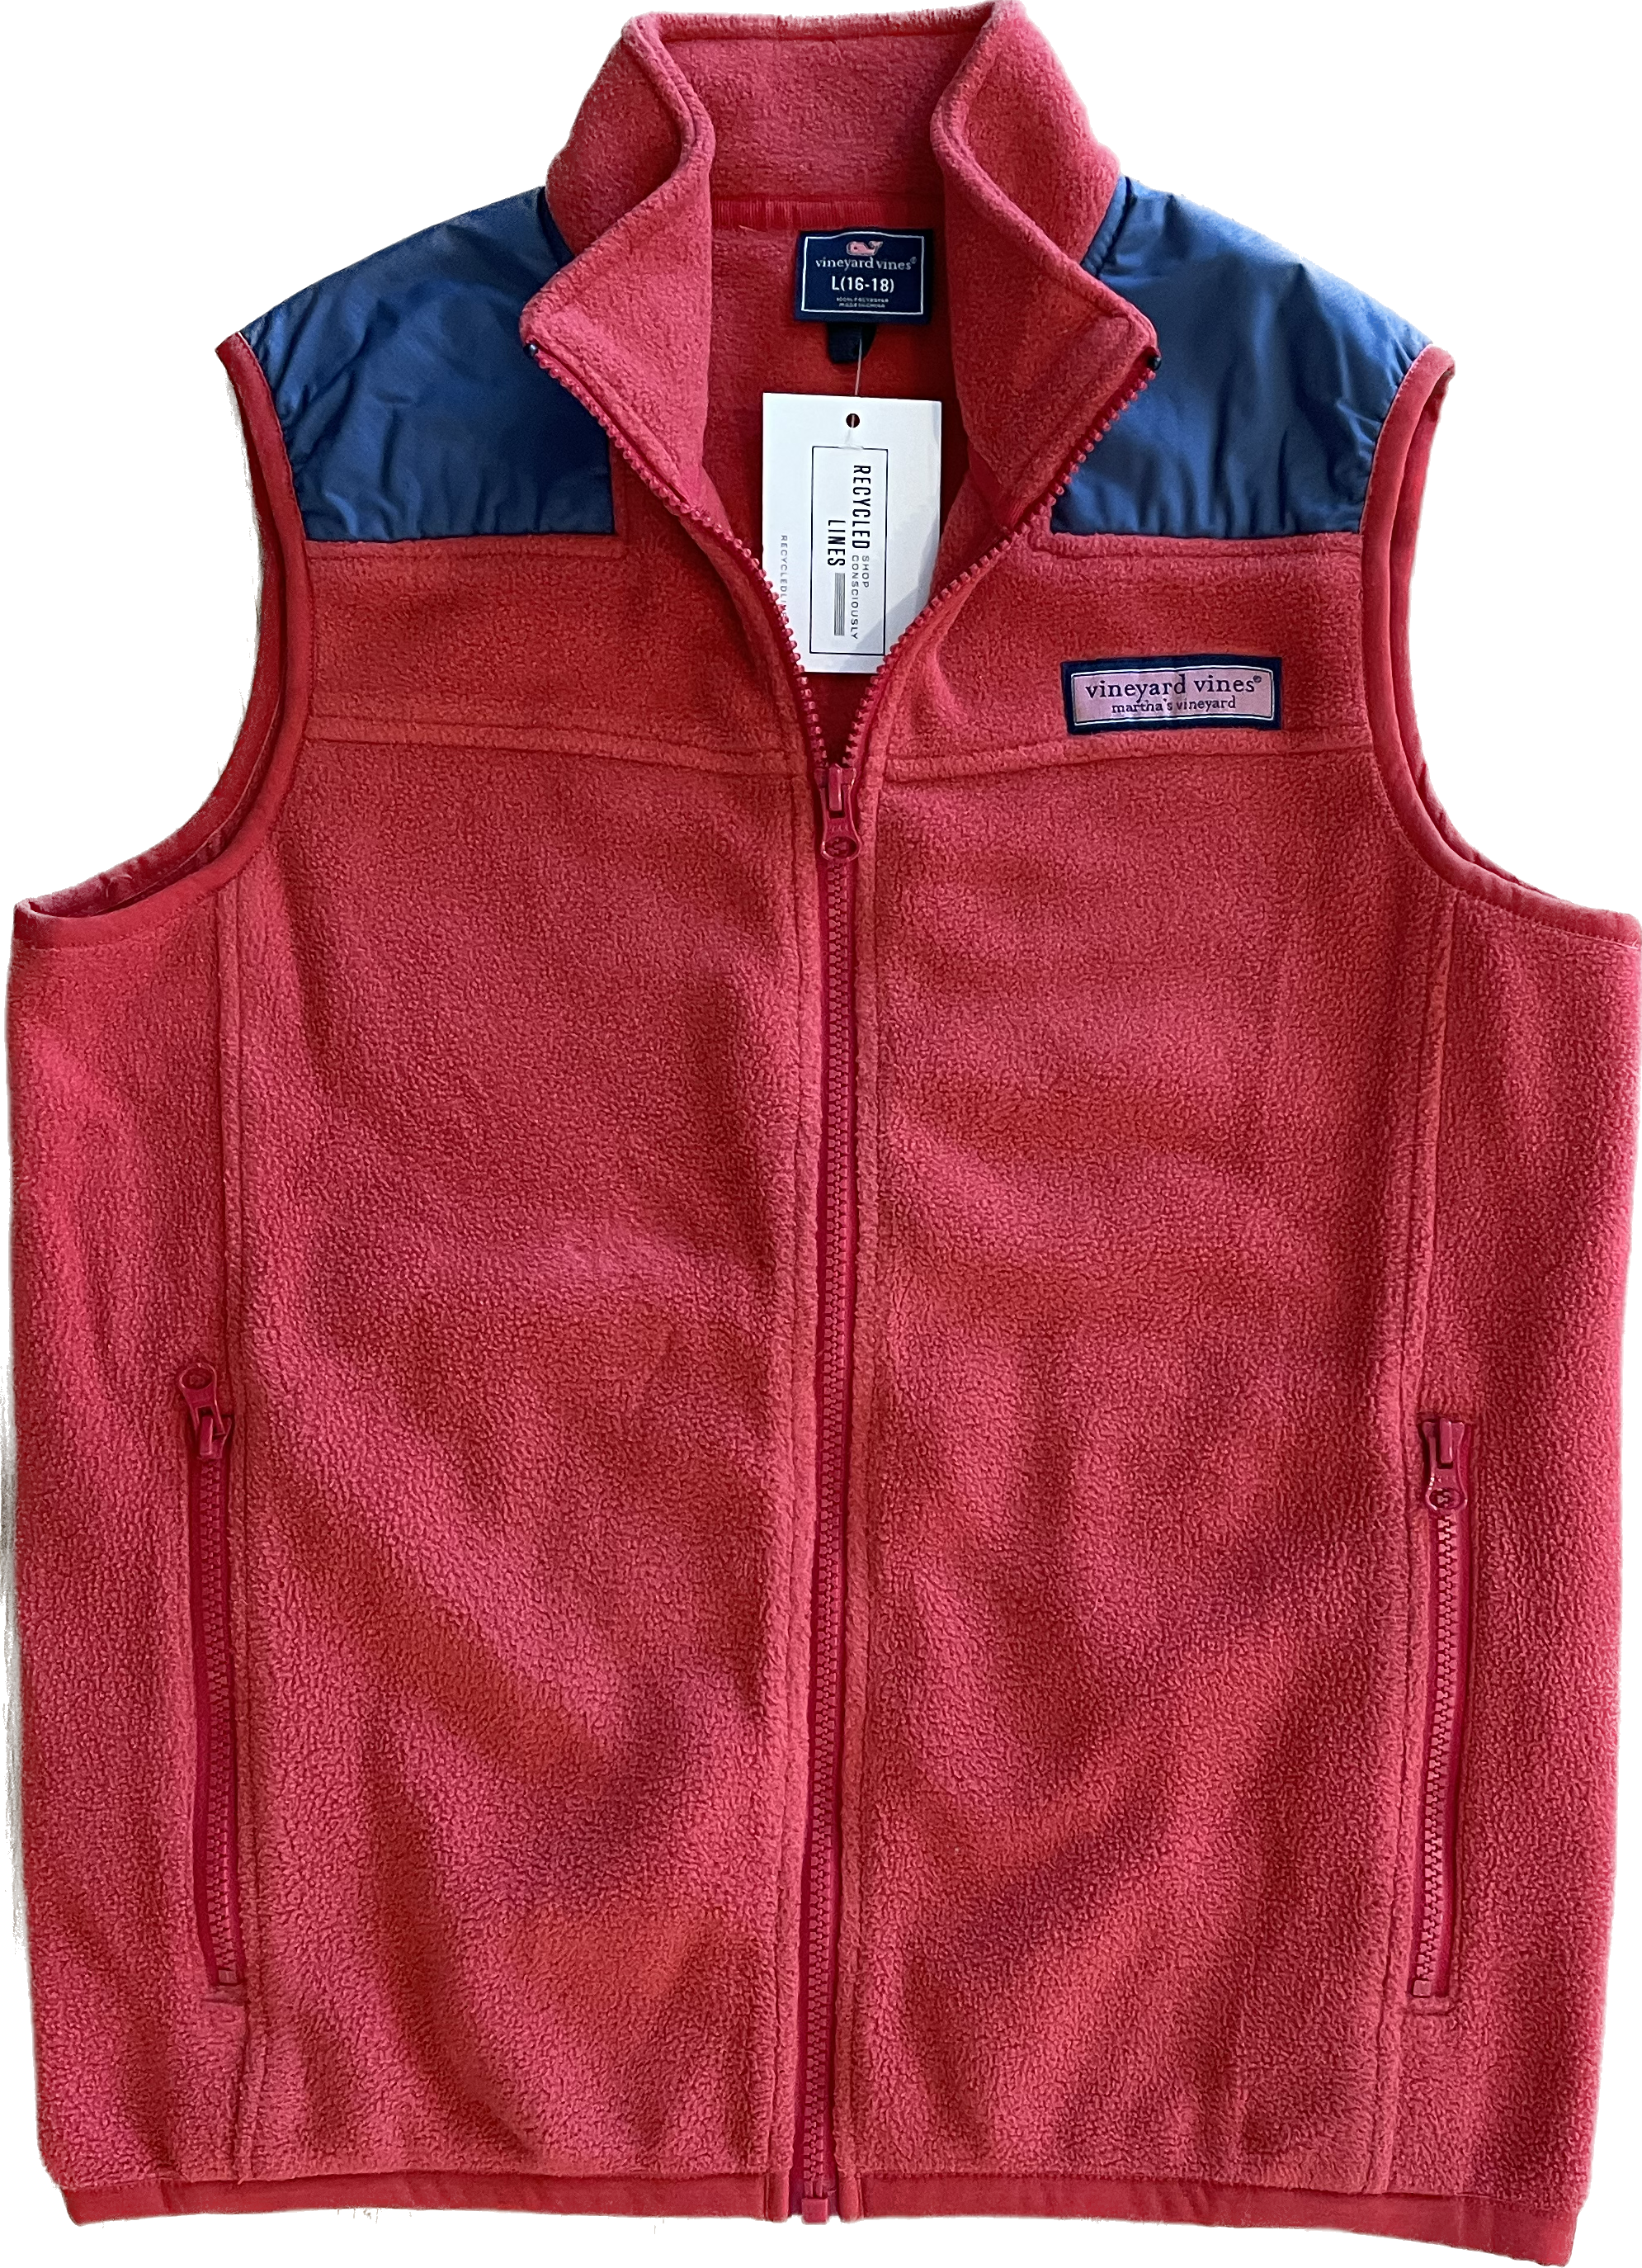 Vineyard Vines Fleece Vest, Red Boys Size L (16/18)